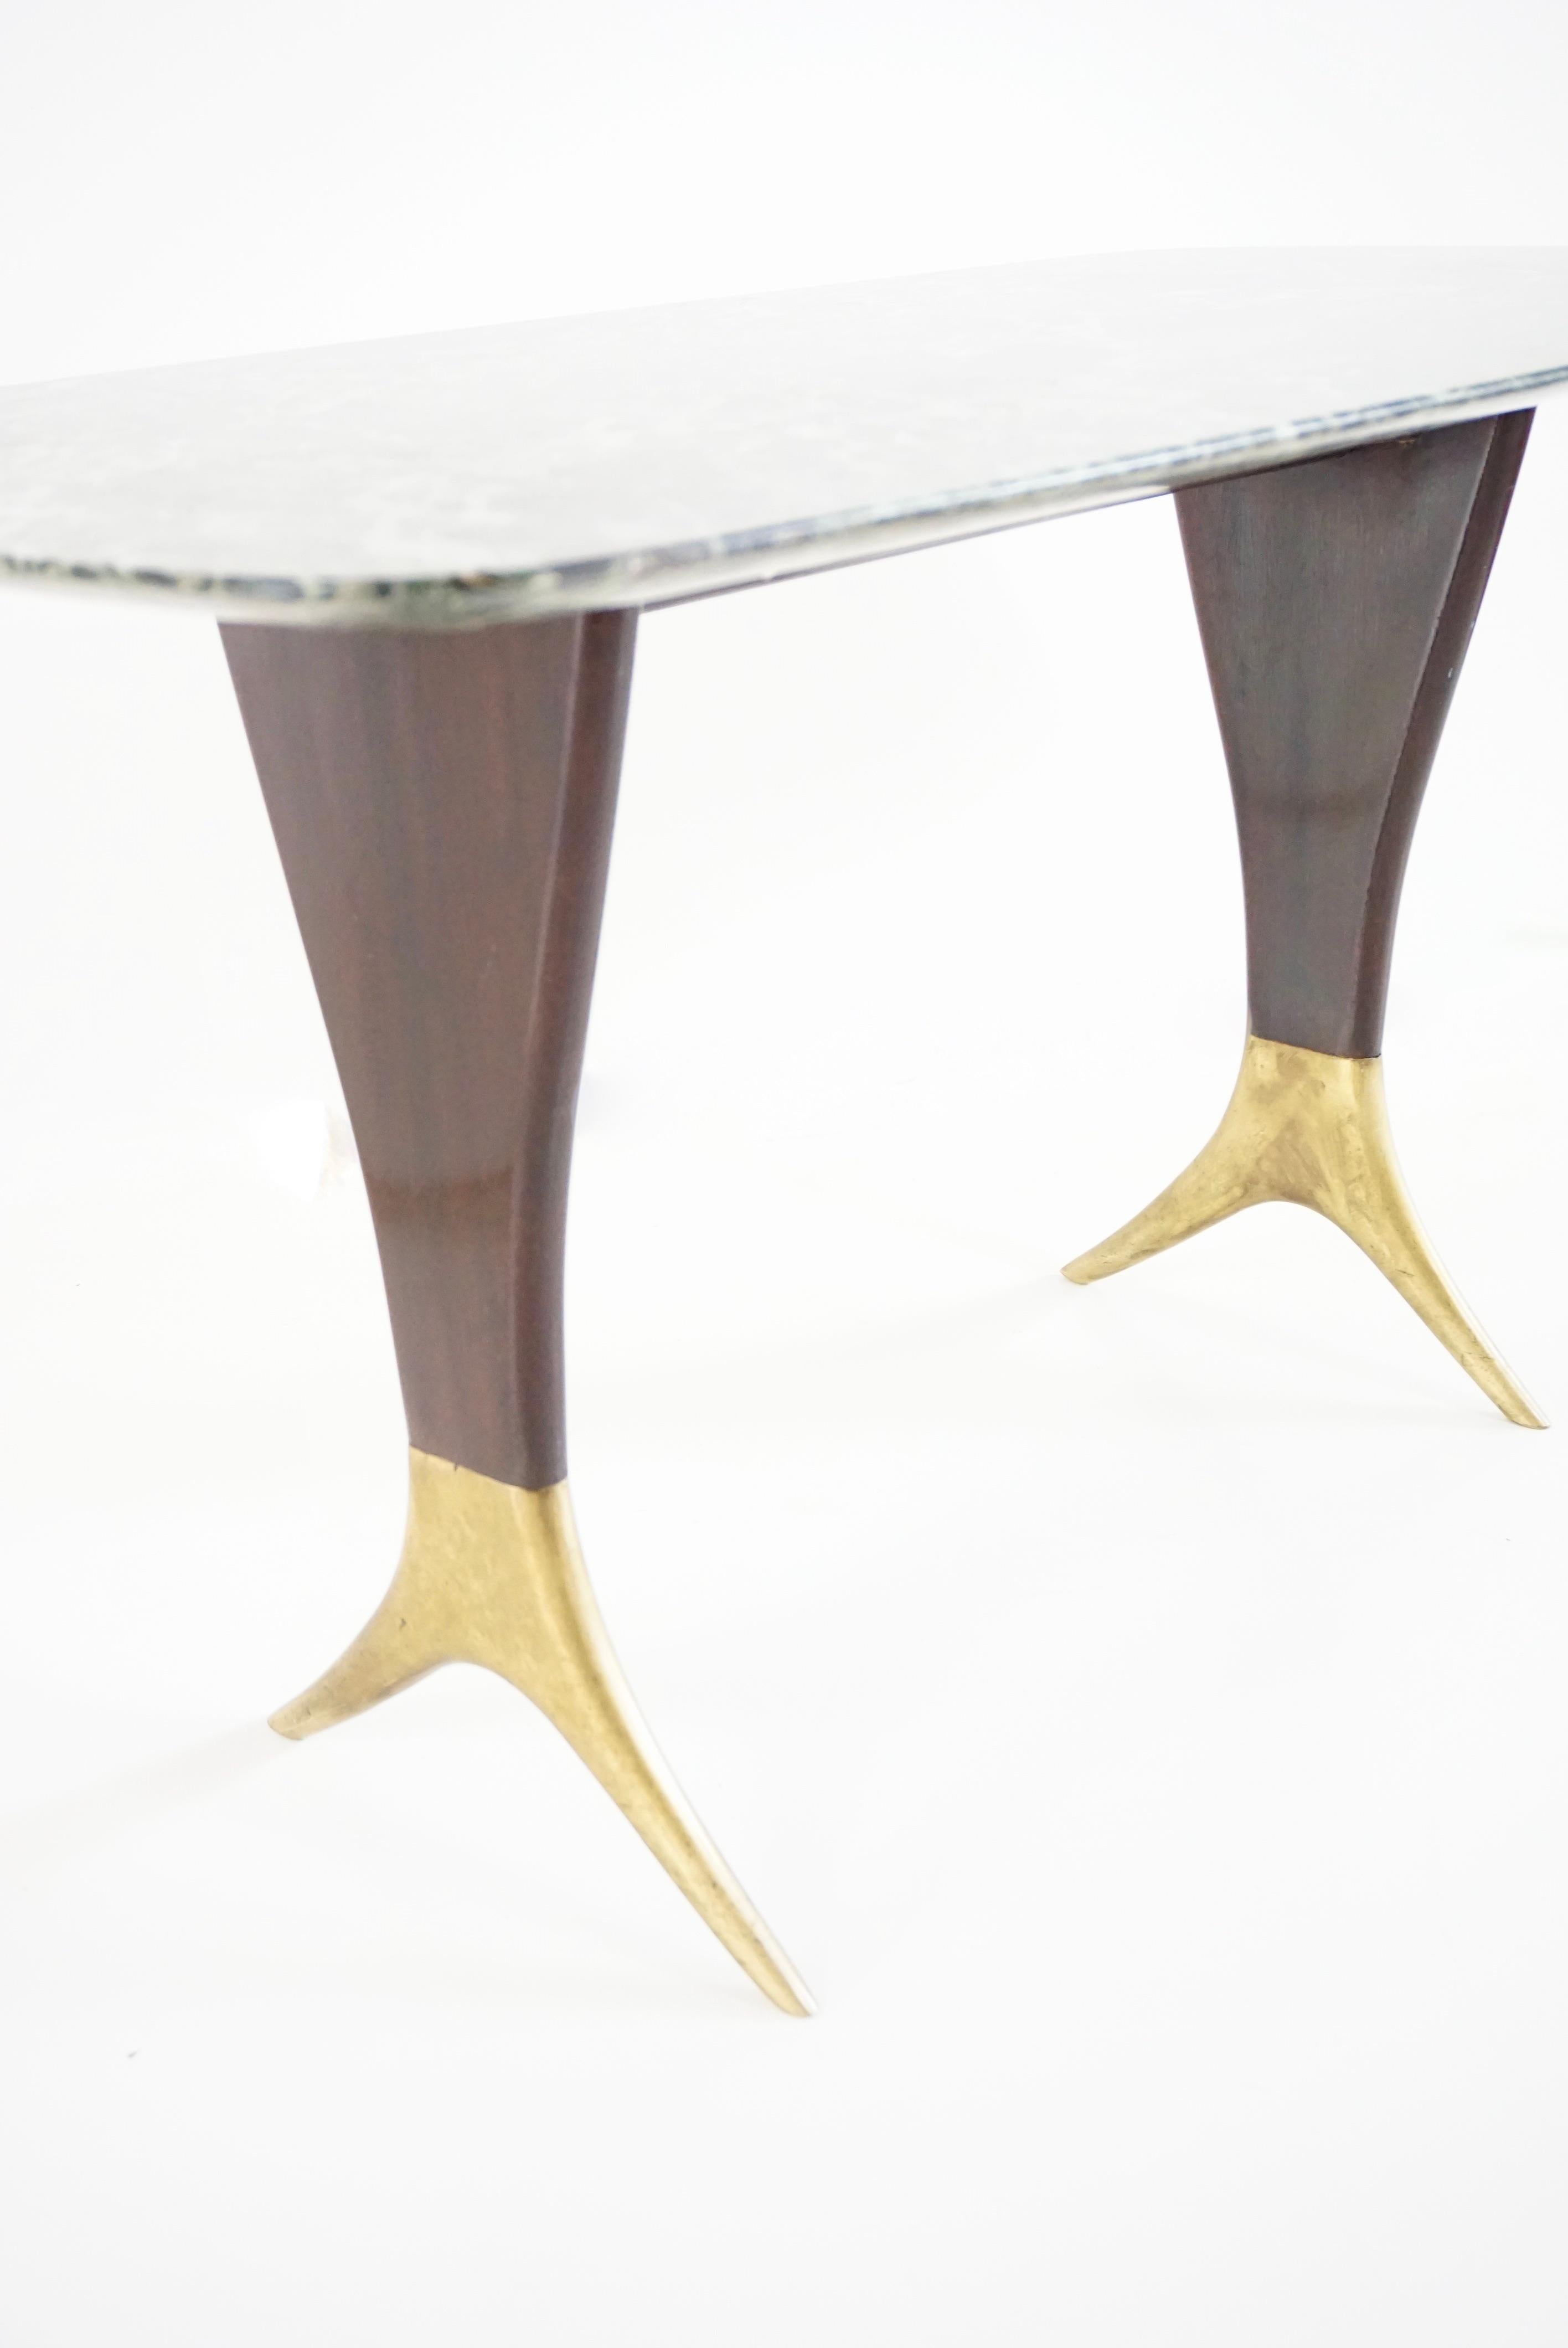 Fine Guglielmo Ulrich coffee table, verde alpi marble top, brass feet,  1940 For Sale 5